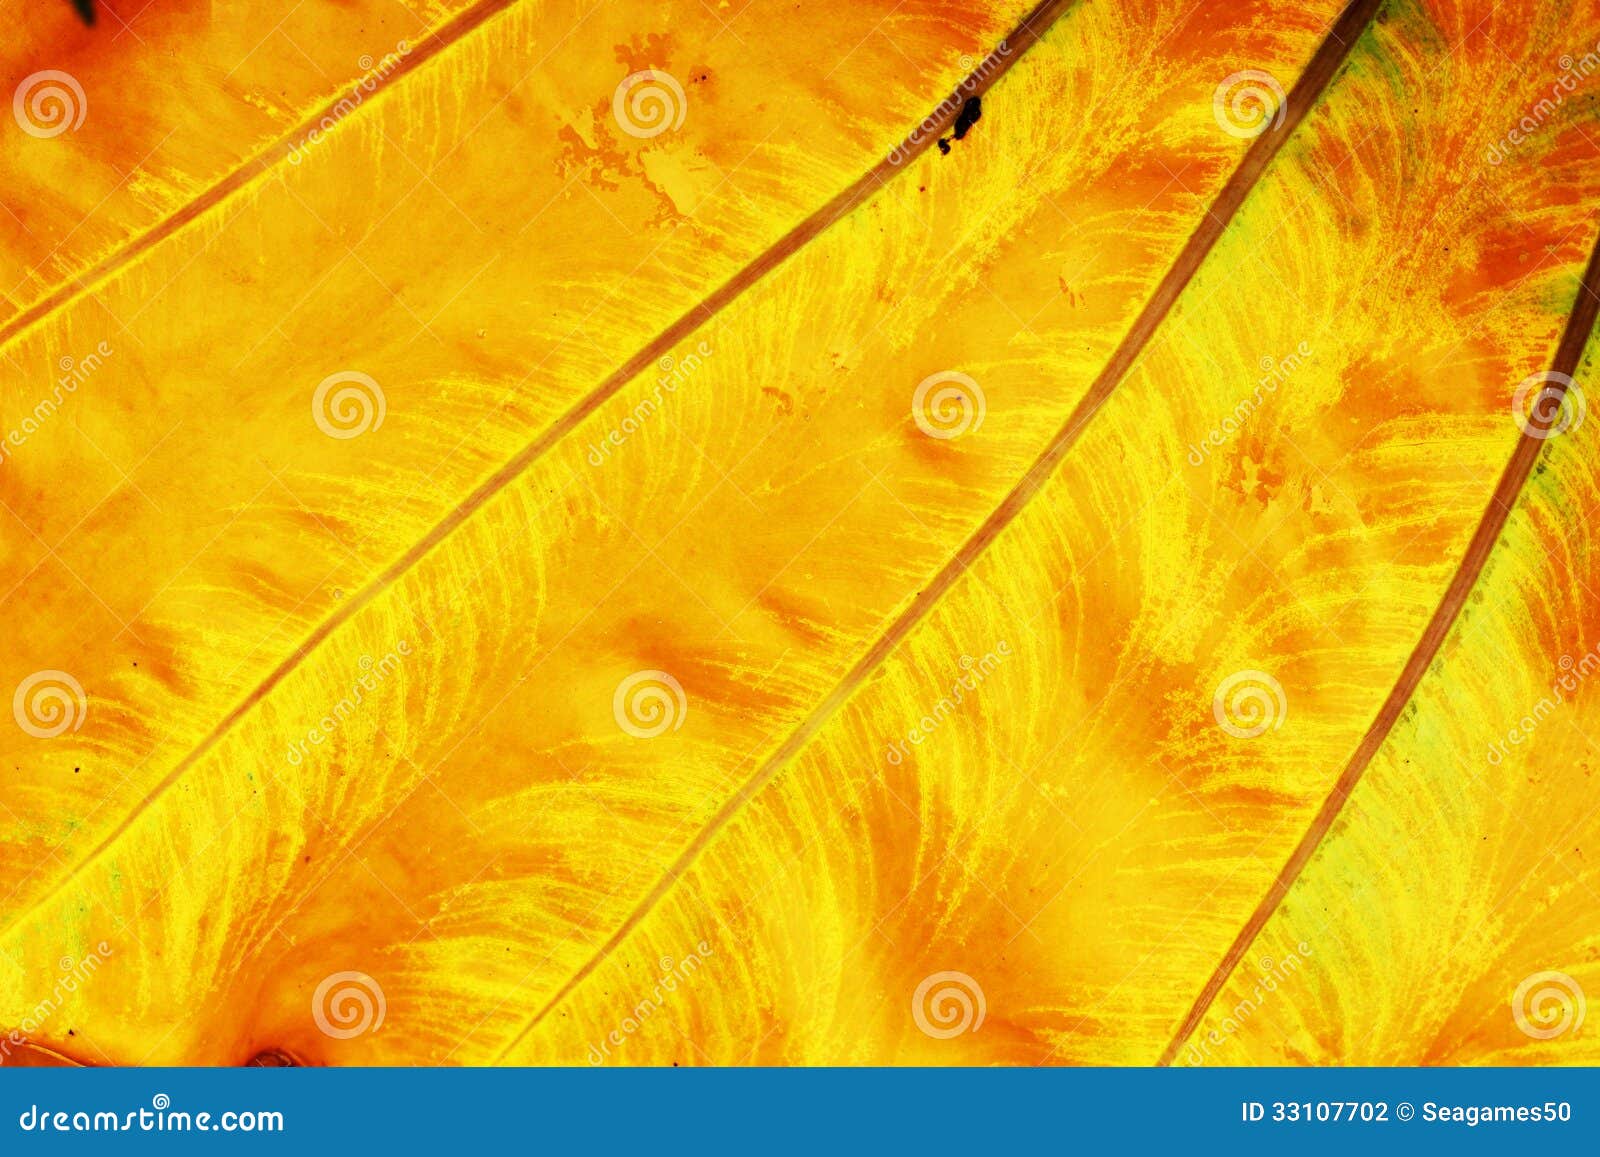 Yellow leaf background. stock photo. Image of leaf, vibrant - 33107702